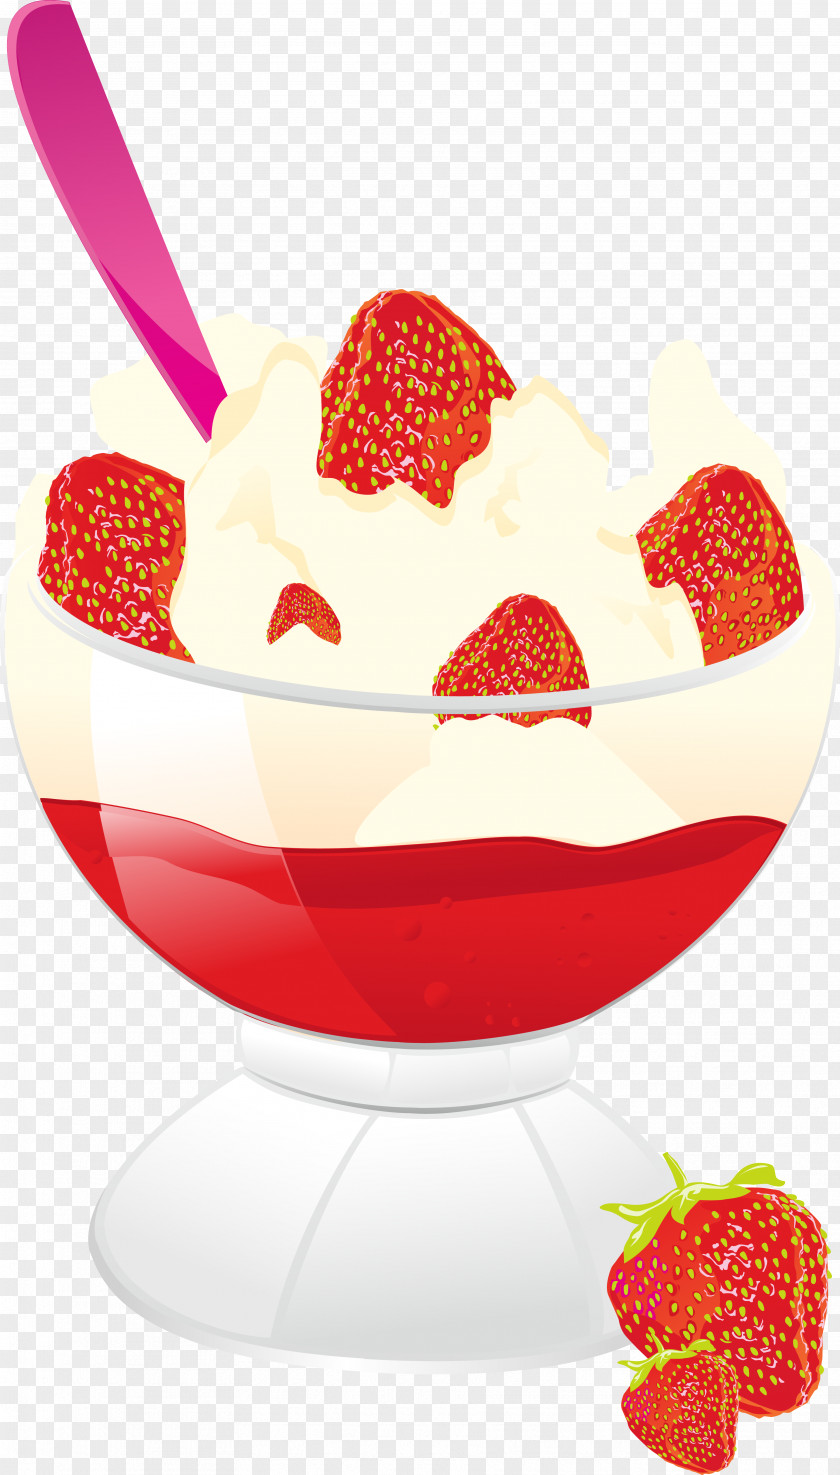 Hand Painted Strawberry Pudding Ice Cream Cup Sundae Smoothie Milkshake Frozen Yogurt PNG